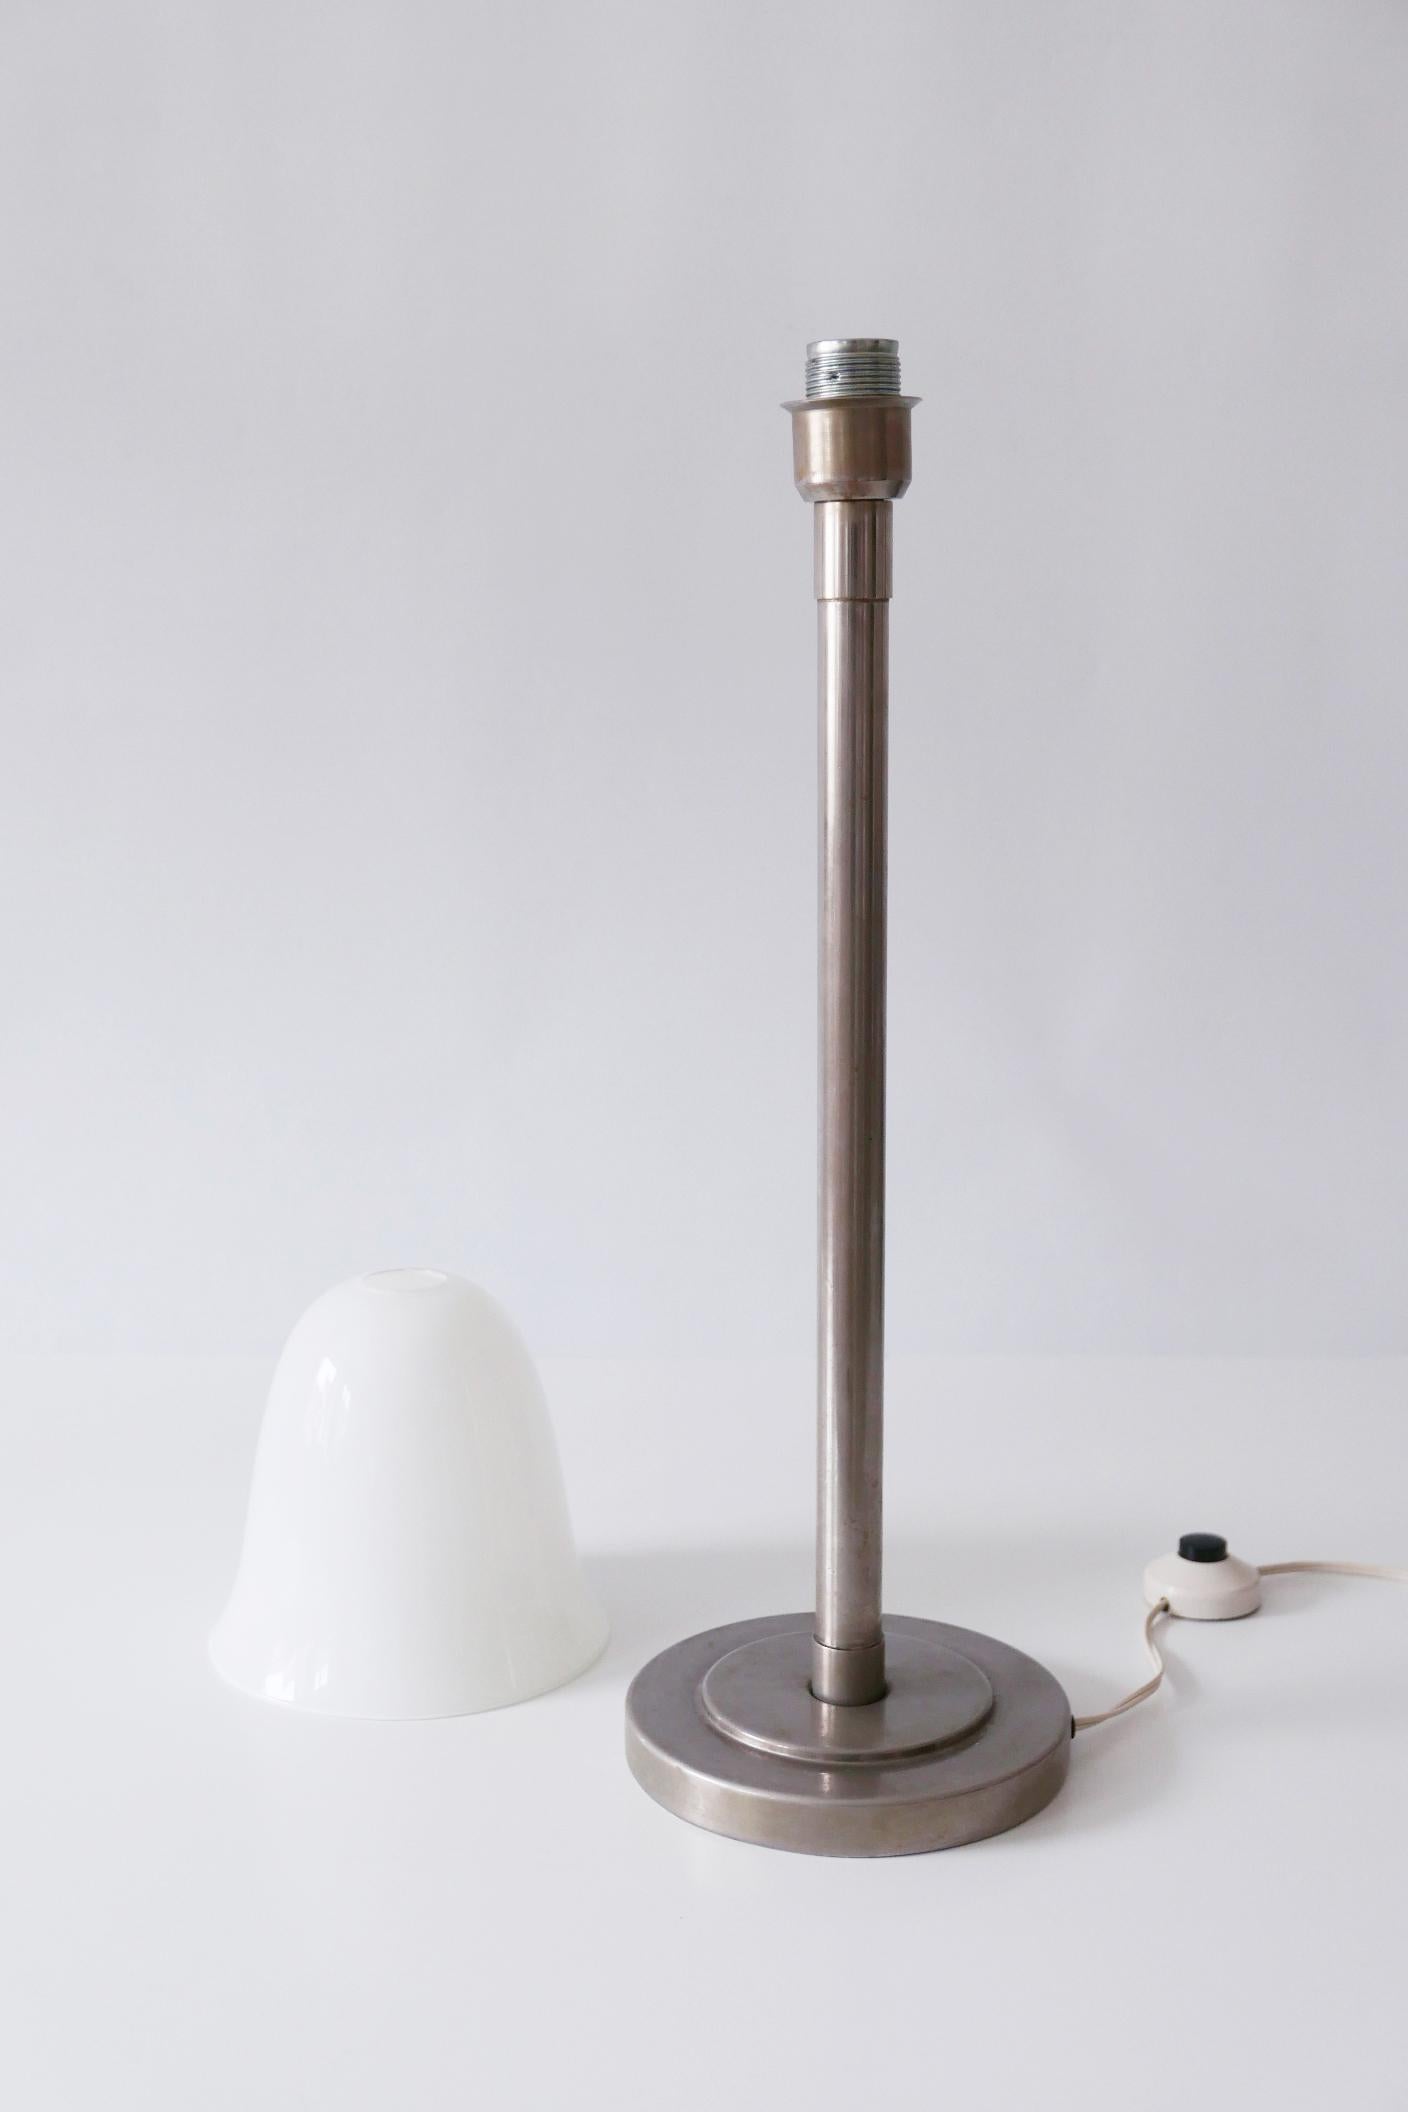 Elegant Art Deco Bauhaus Nickel-Plated Brass Table Lamp or Floor Light, 1930s For Sale 6